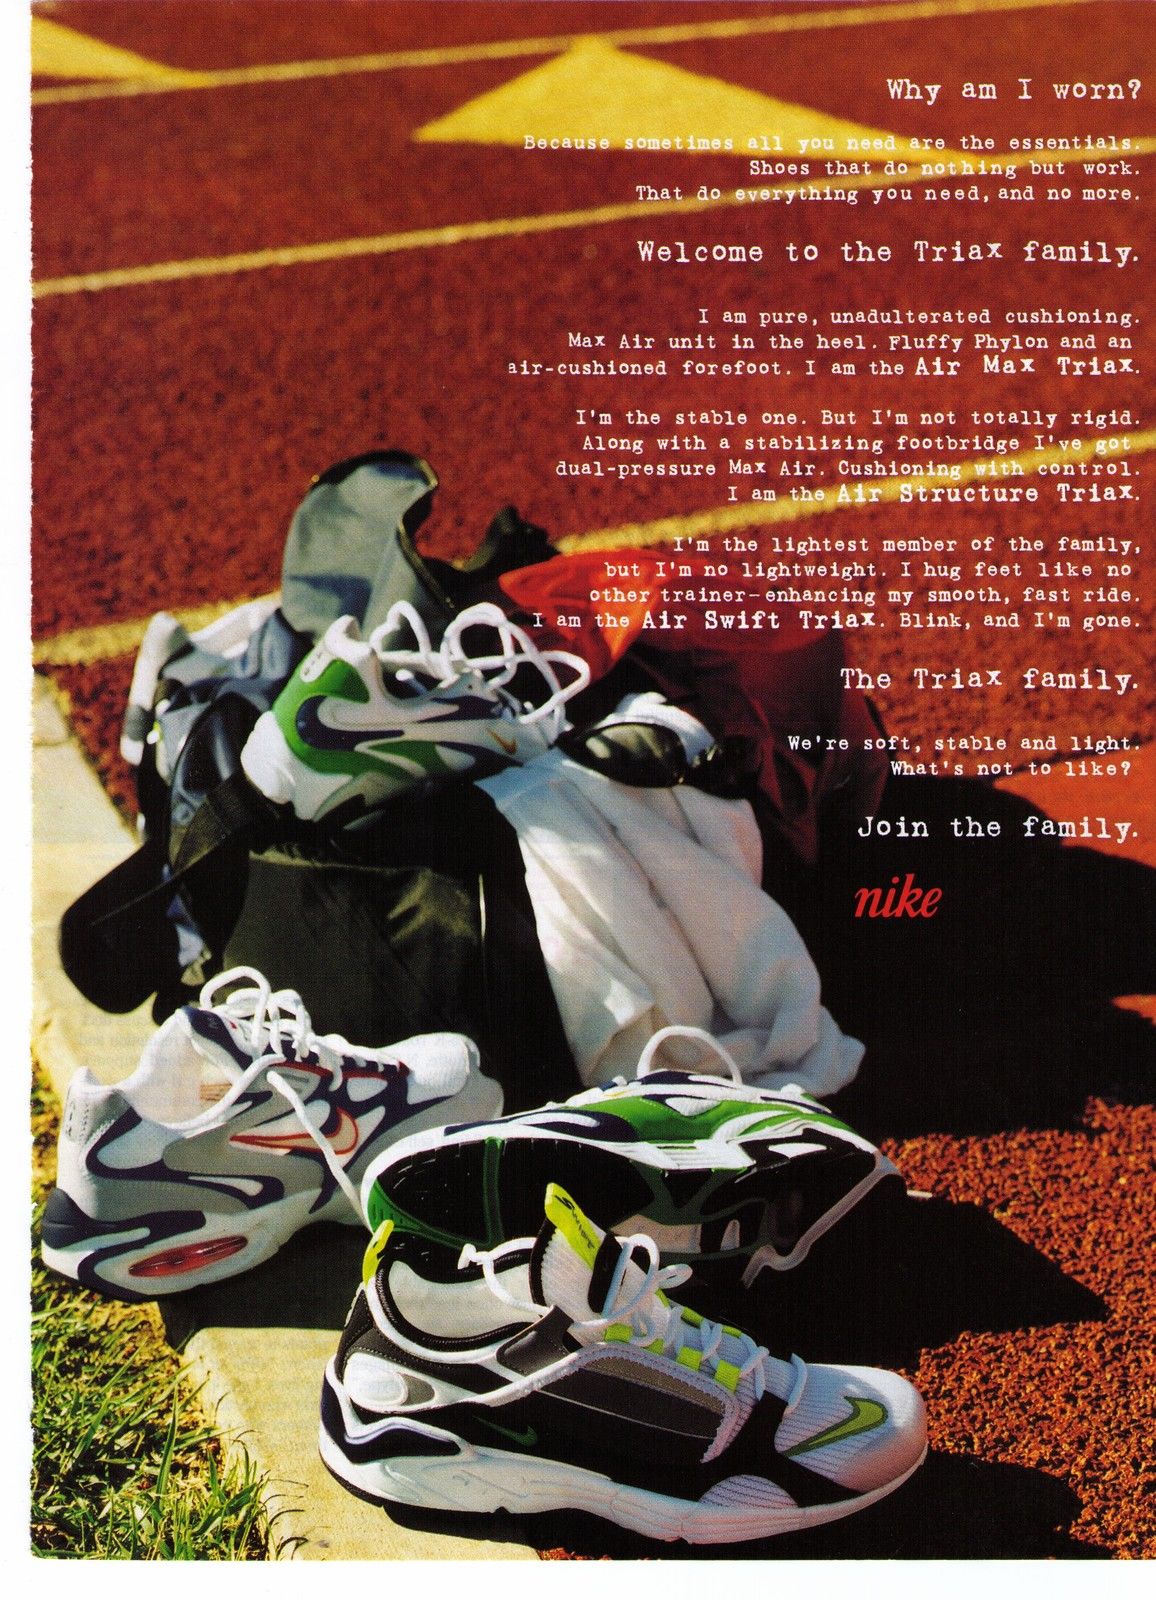 noodzaak vaak binnenvallen Nike Air Swift Triax Running Shoe 1998